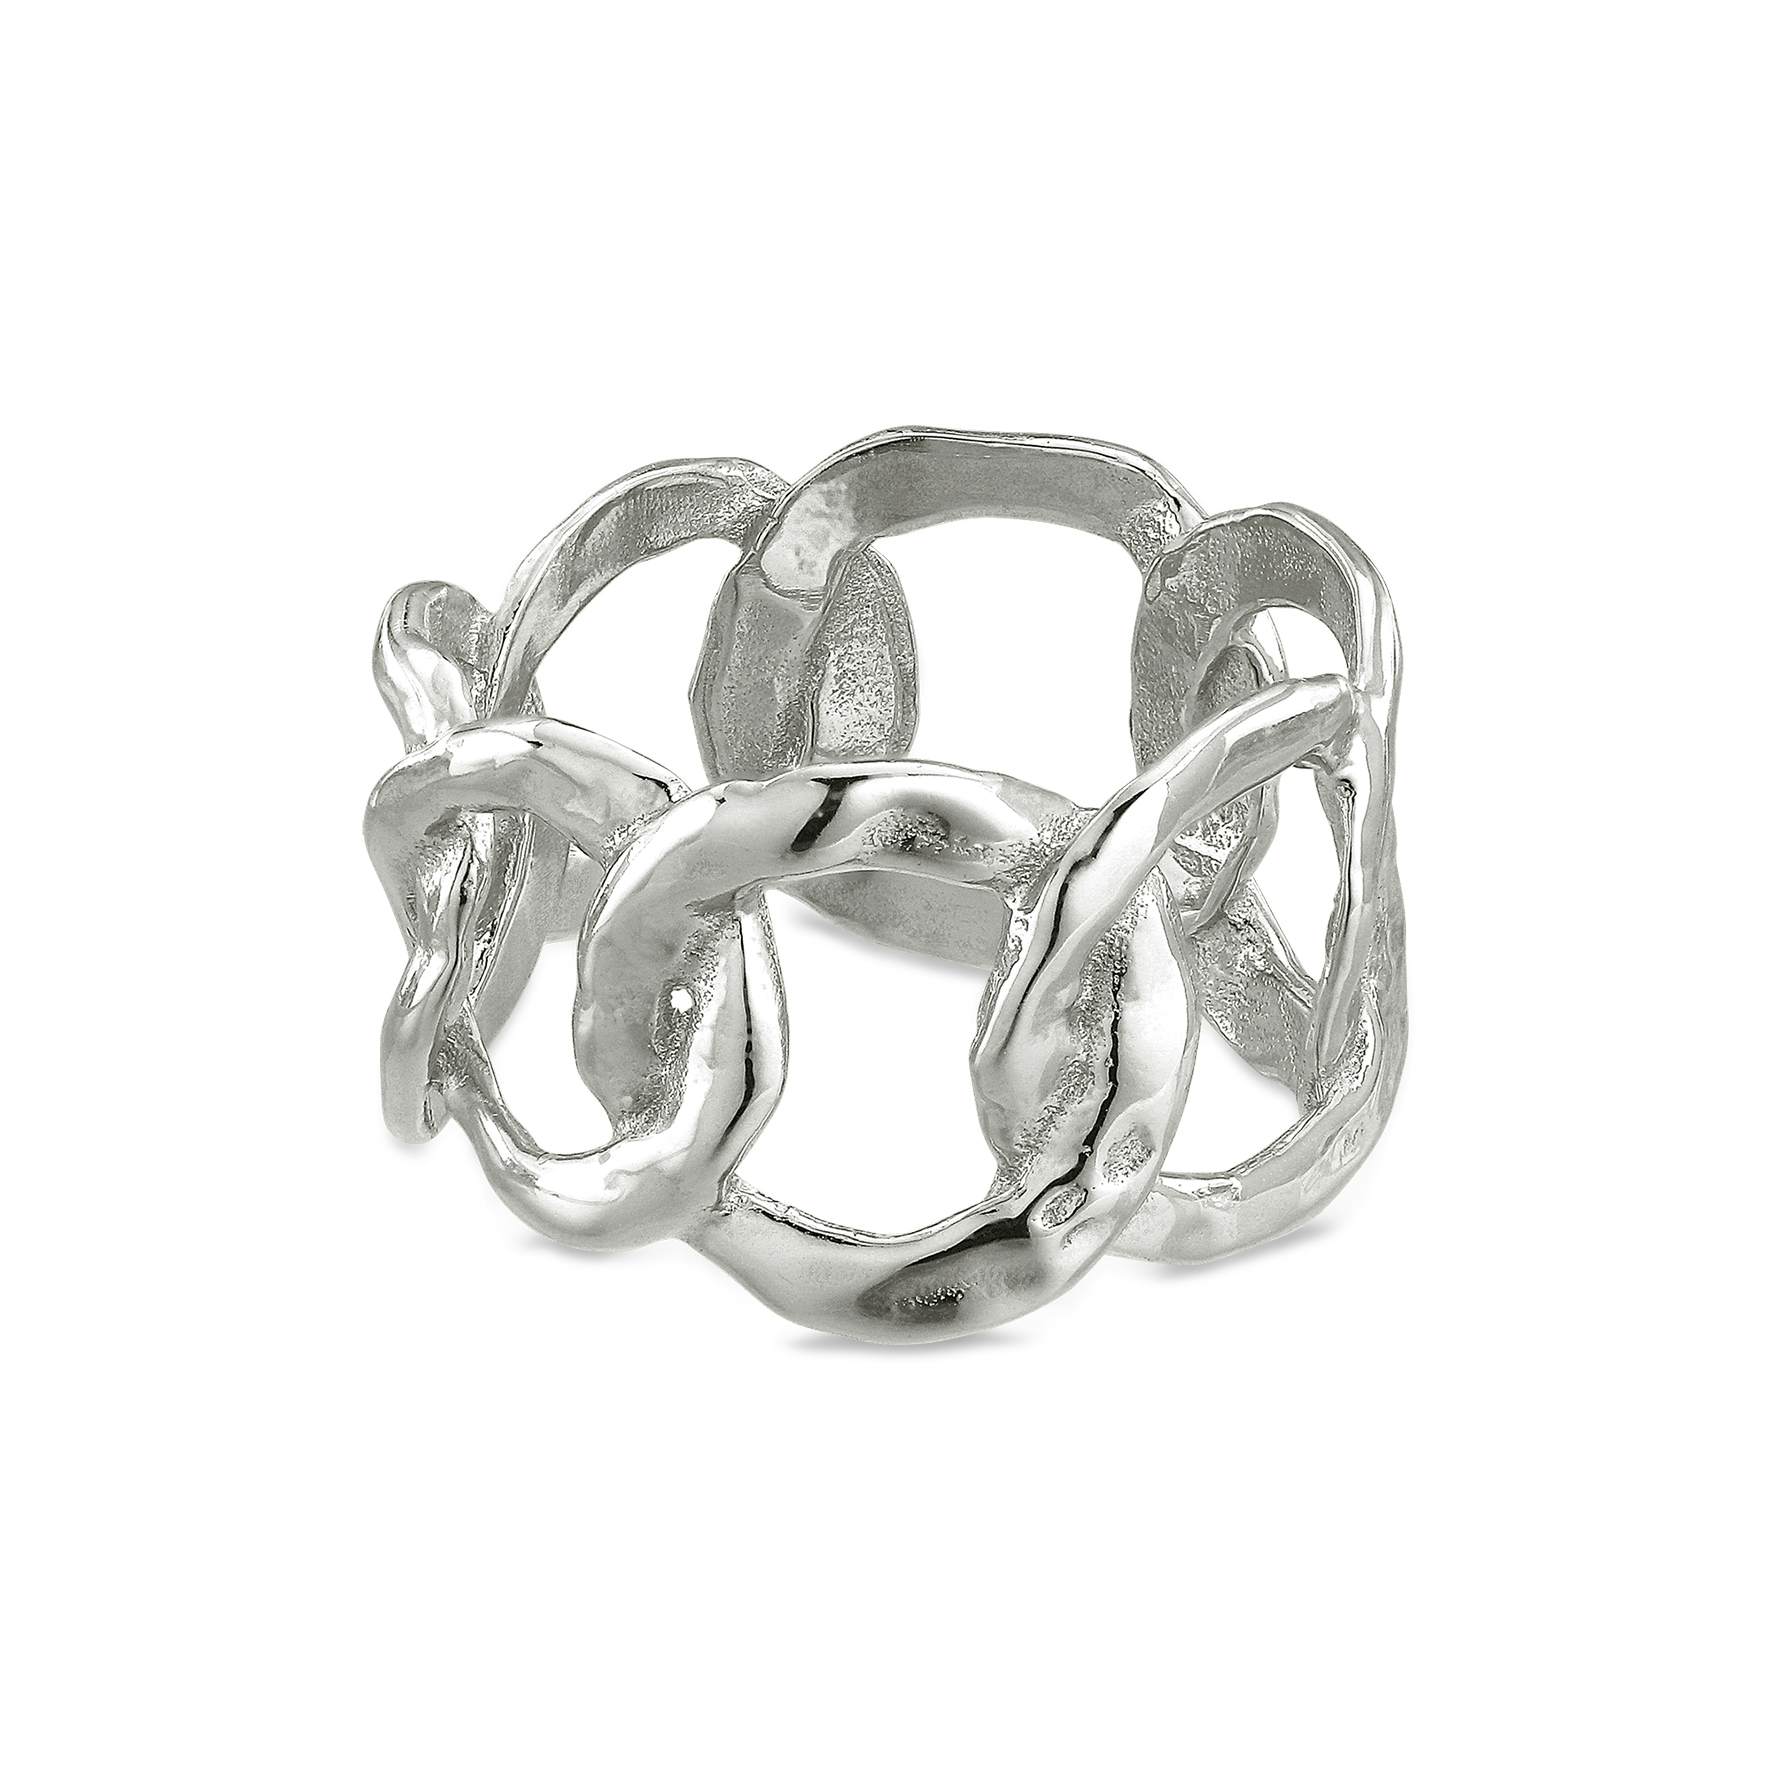 Big Space Link Ring from Jane Kønig in Silver Sterling 925